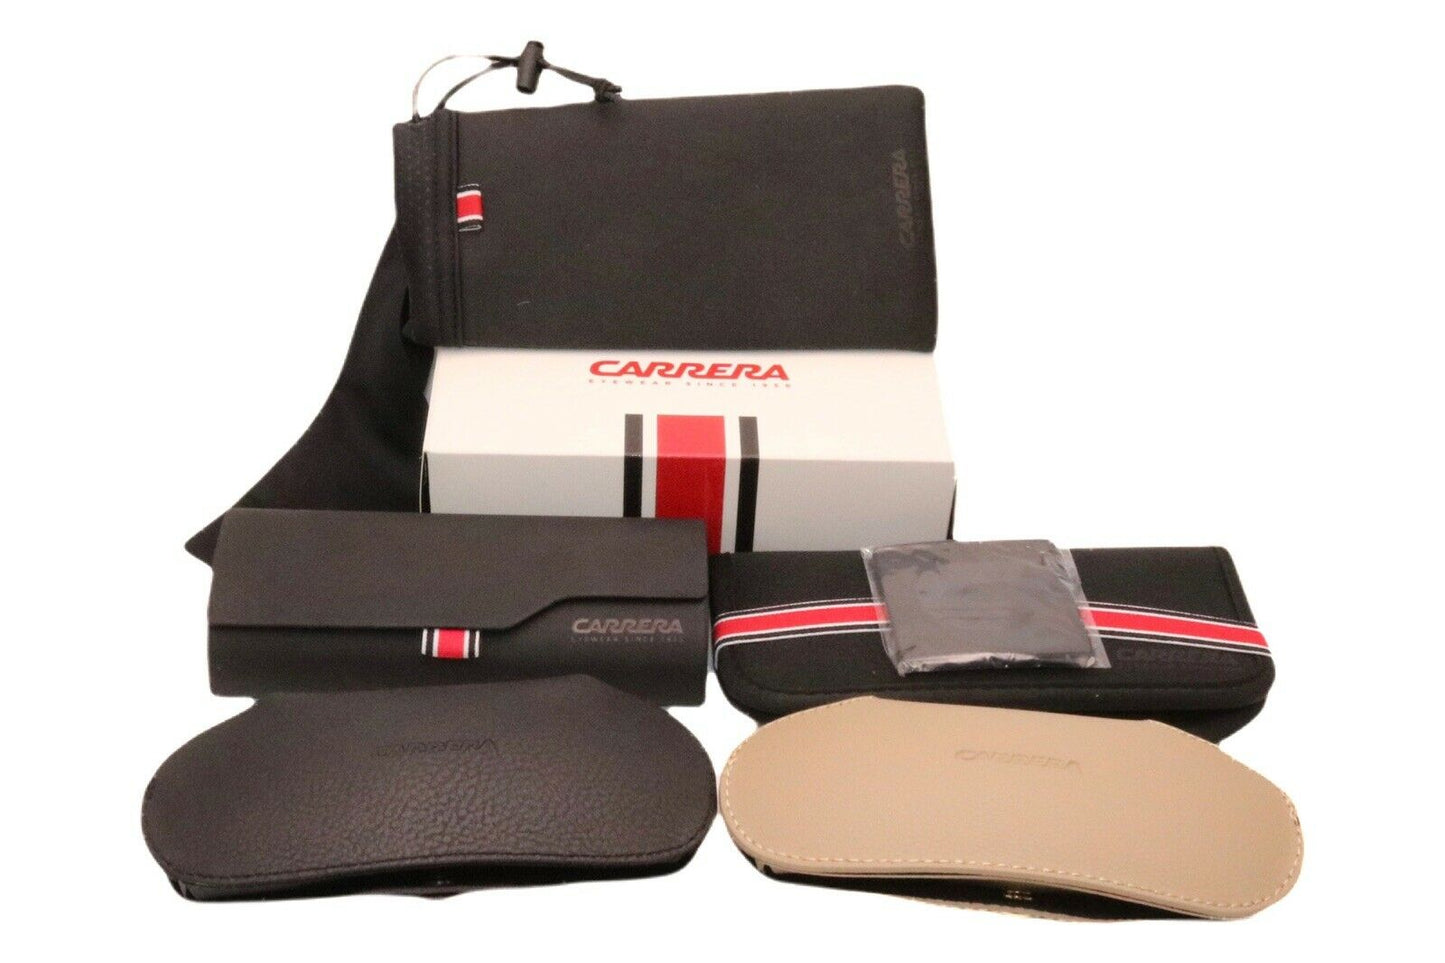 Carrera 8026/S-0003 QT 57mm New Sunglasses